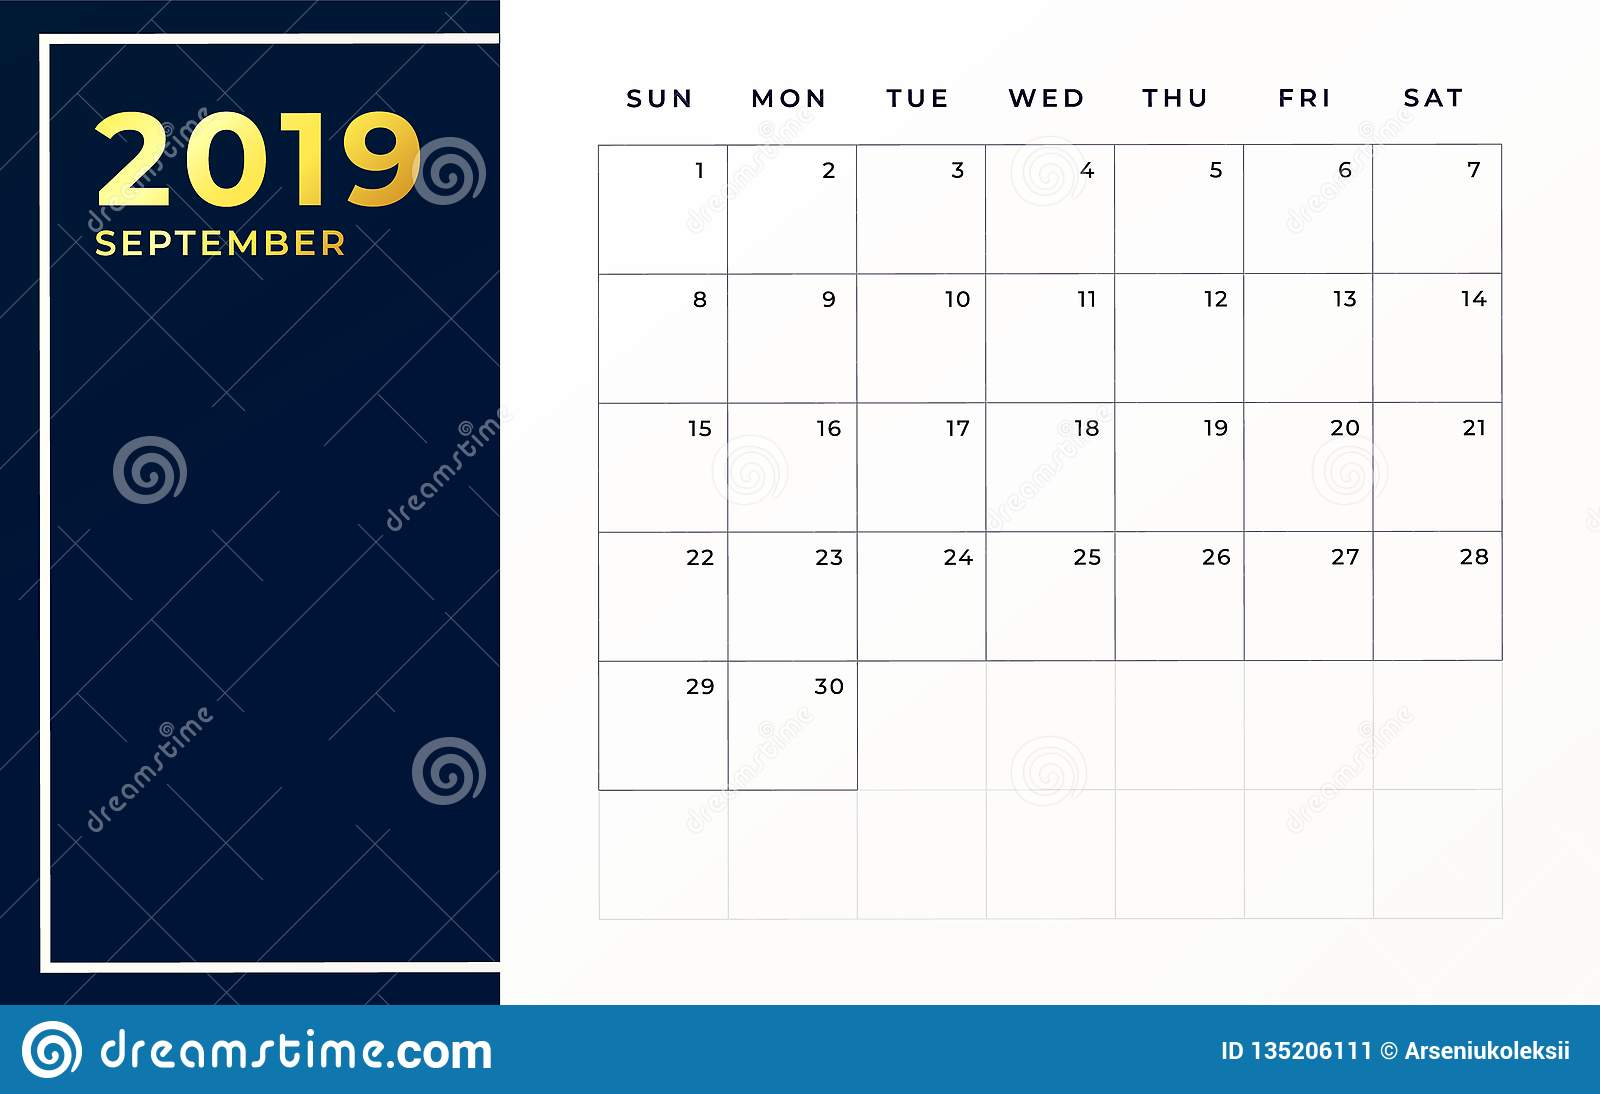 September 2019 Schedule Template. Week Starts On Sunday